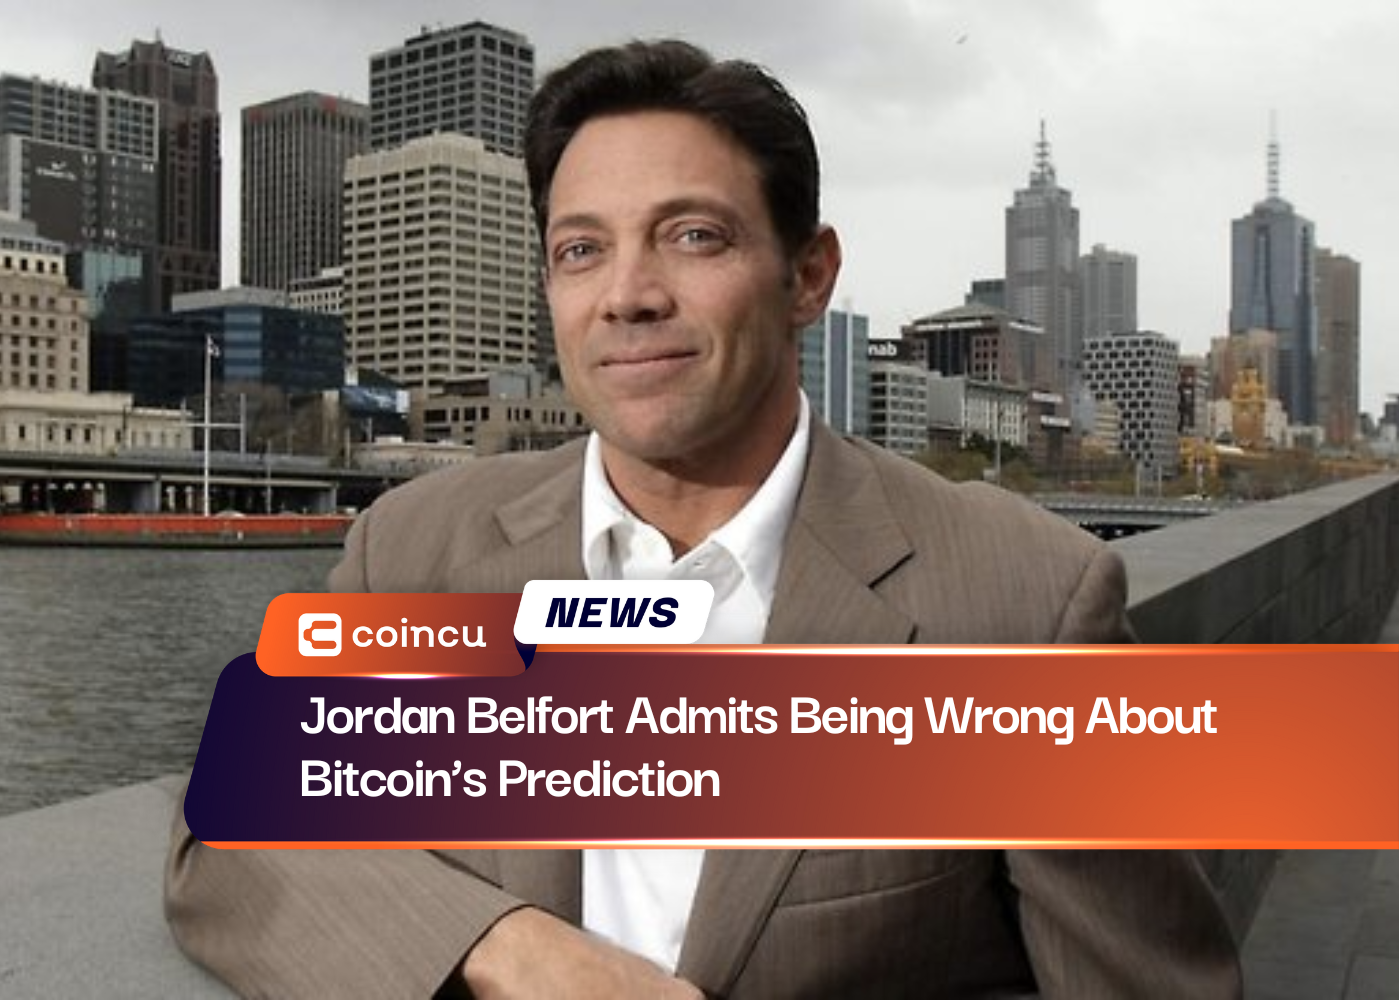 Jordan Belfort Admits Being Wrong About Bitcoin’s Prediction